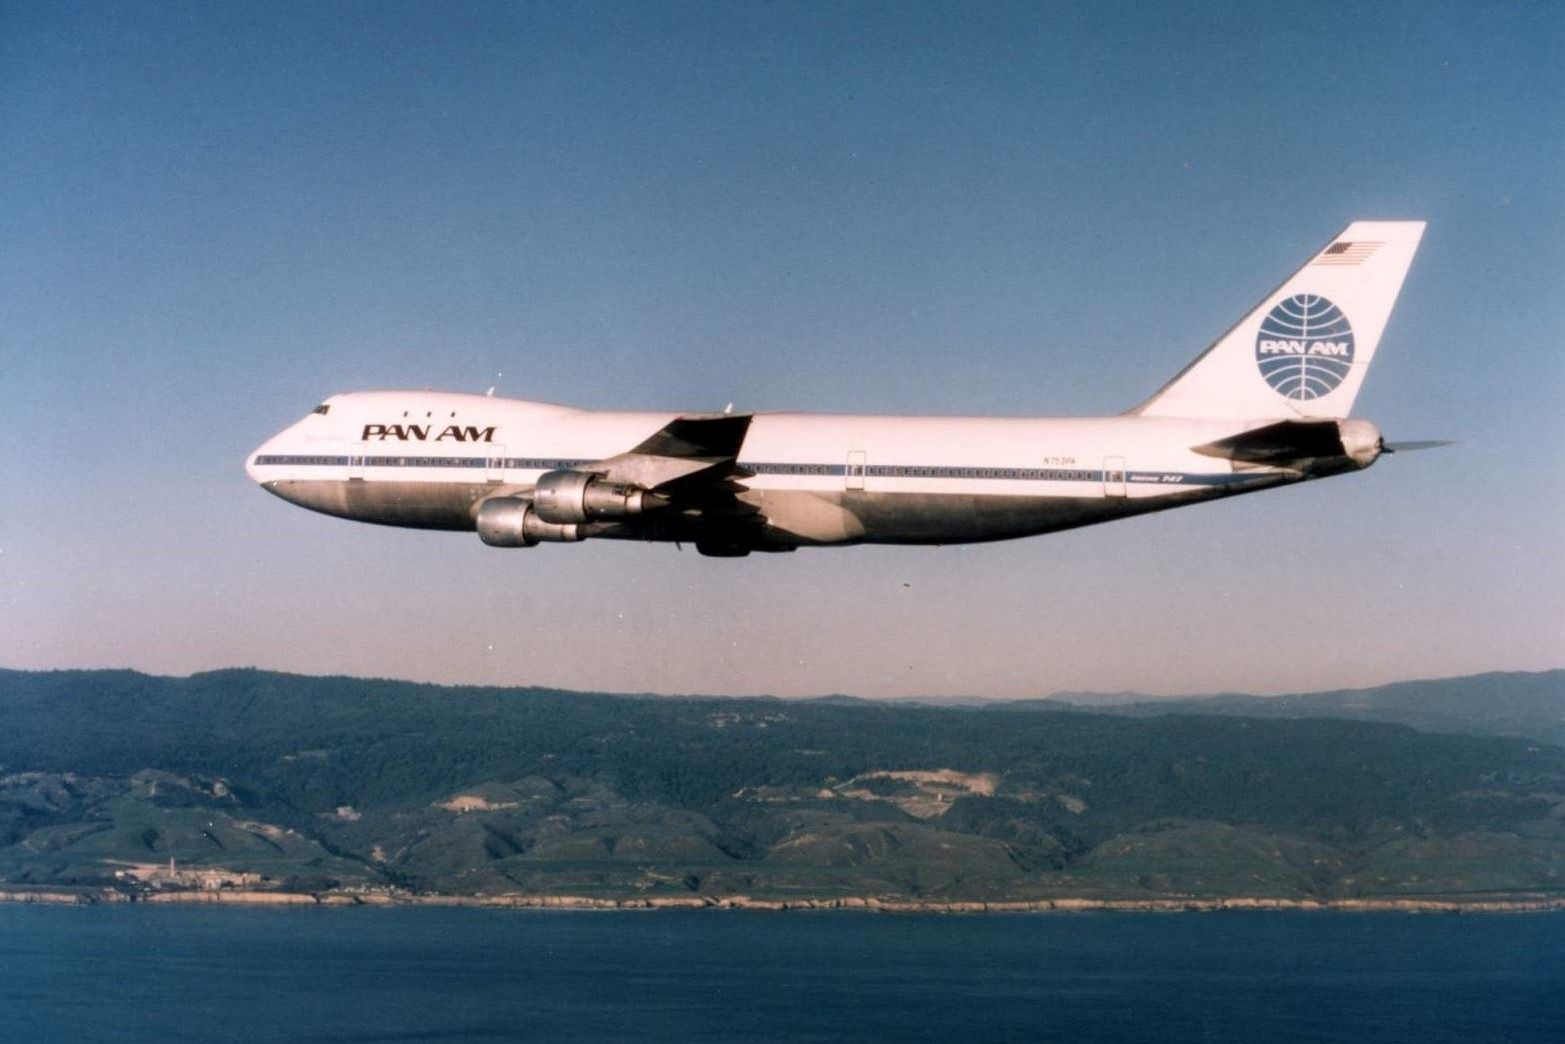 Pan Am’s 747 Clipper Westwind.